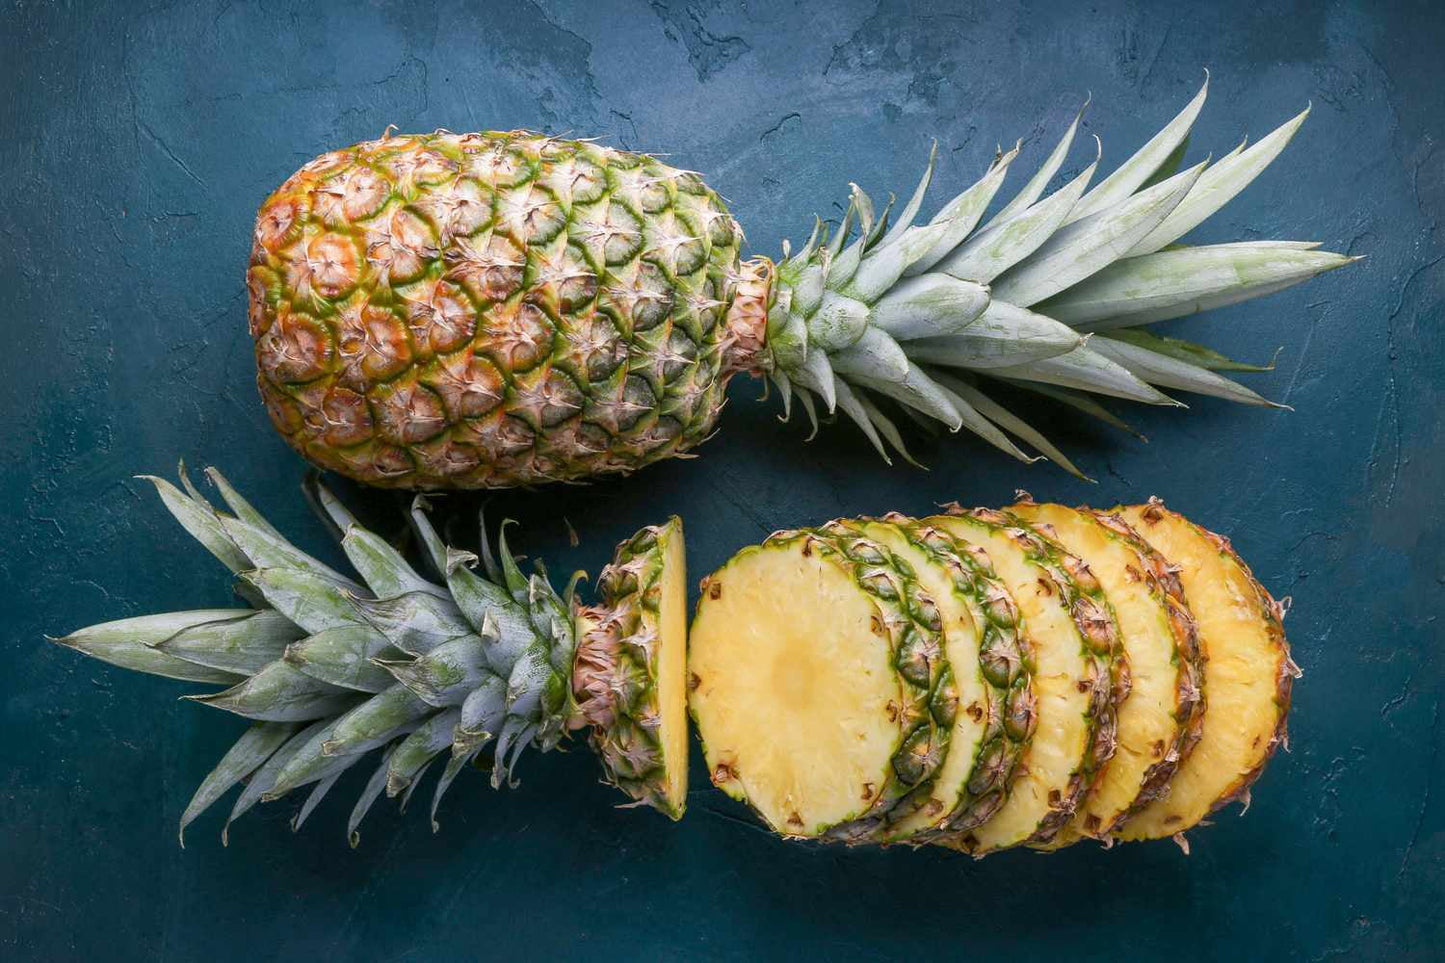 Fresh Pineapple, Each